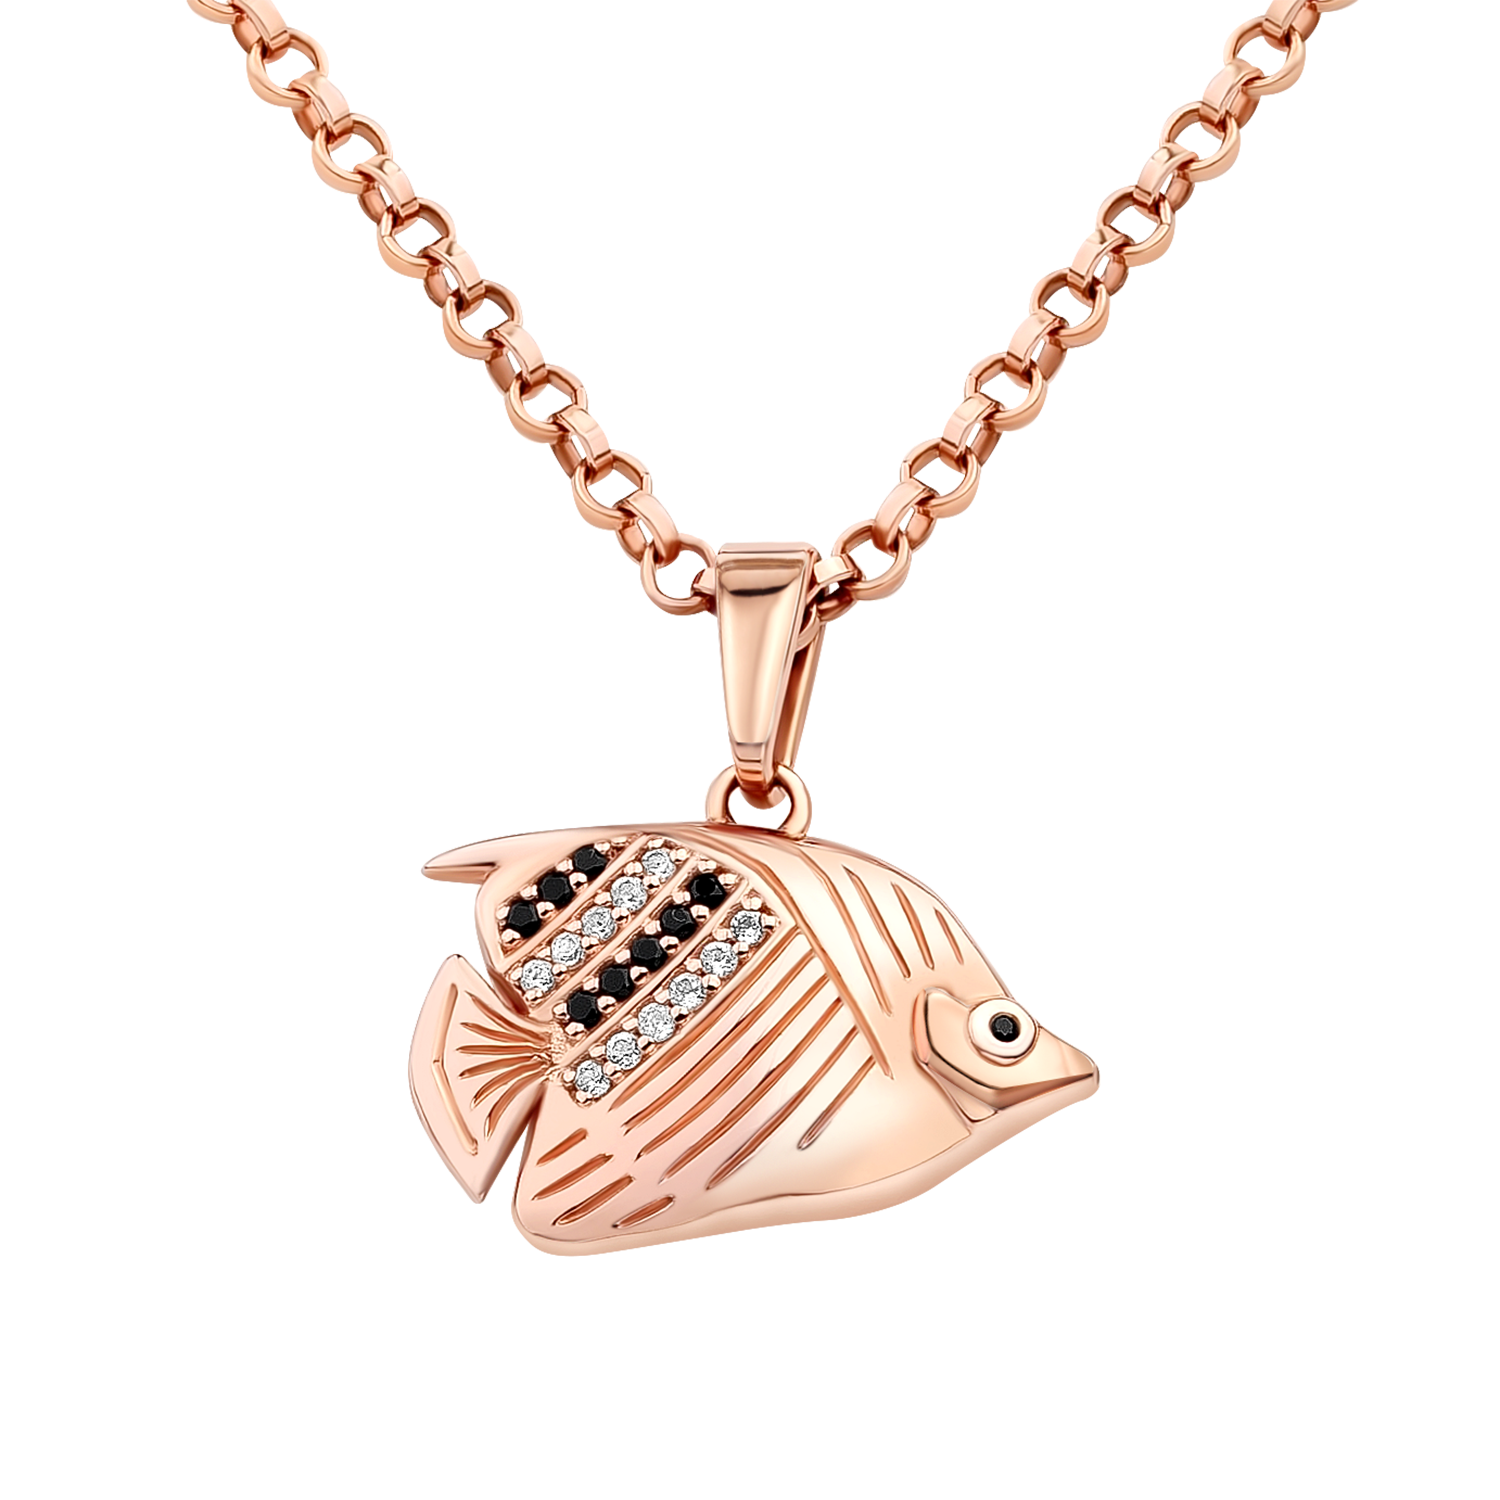 Buy Gold Fish Necklace, Sardine Necklace, Pisces Necklace, Religious Necklace  Gold Fish Charm, Gold Fish Pendant, Sardine Pendant Online in India - Etsy